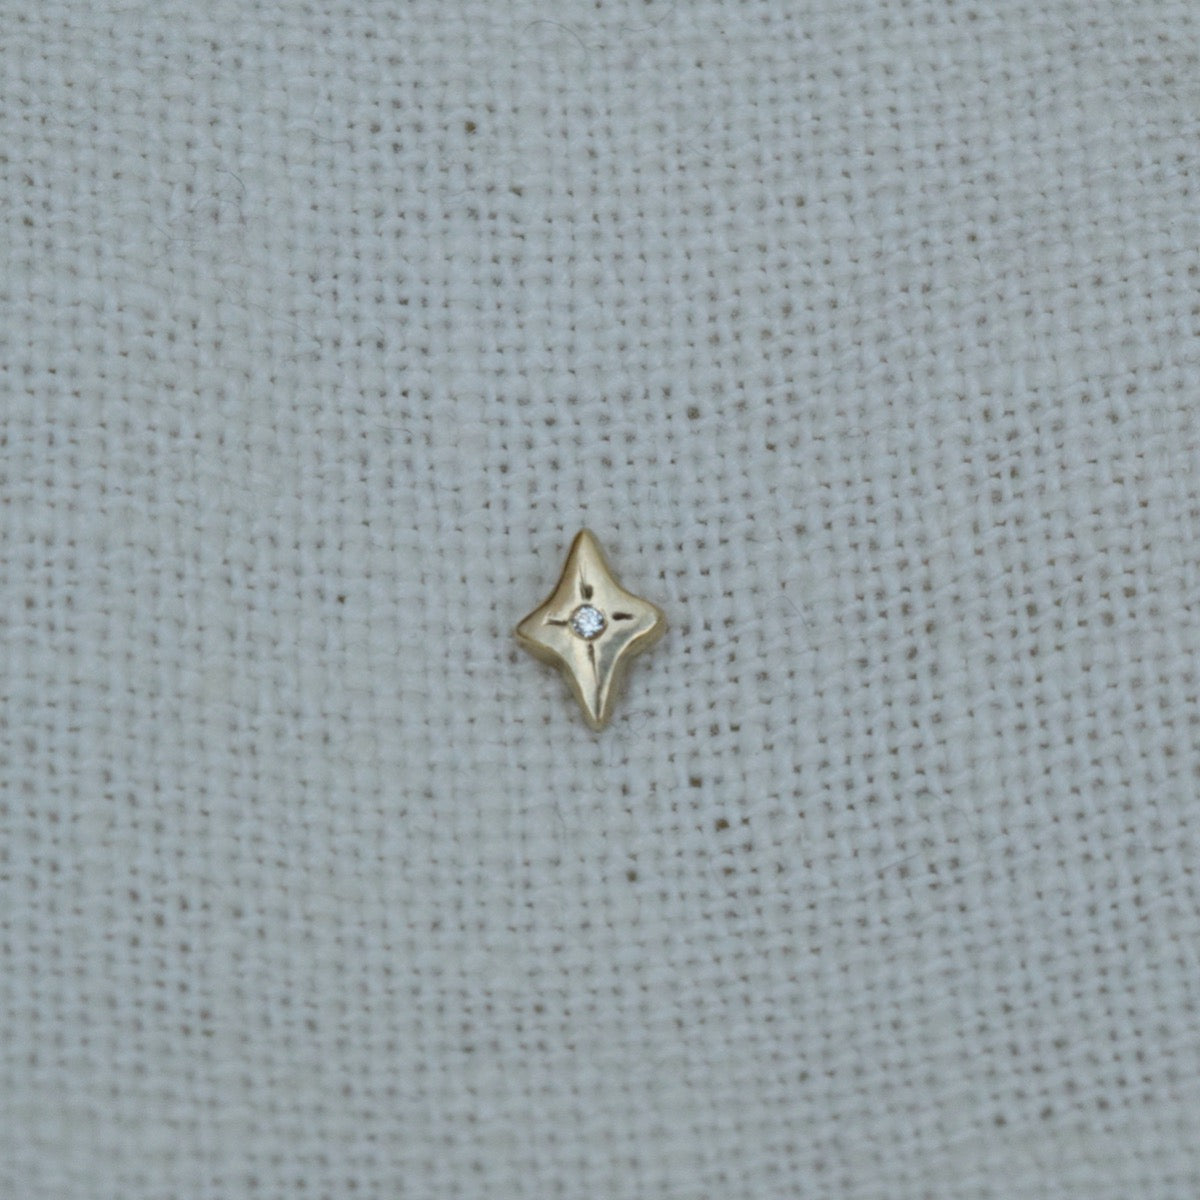 Diamond star earring